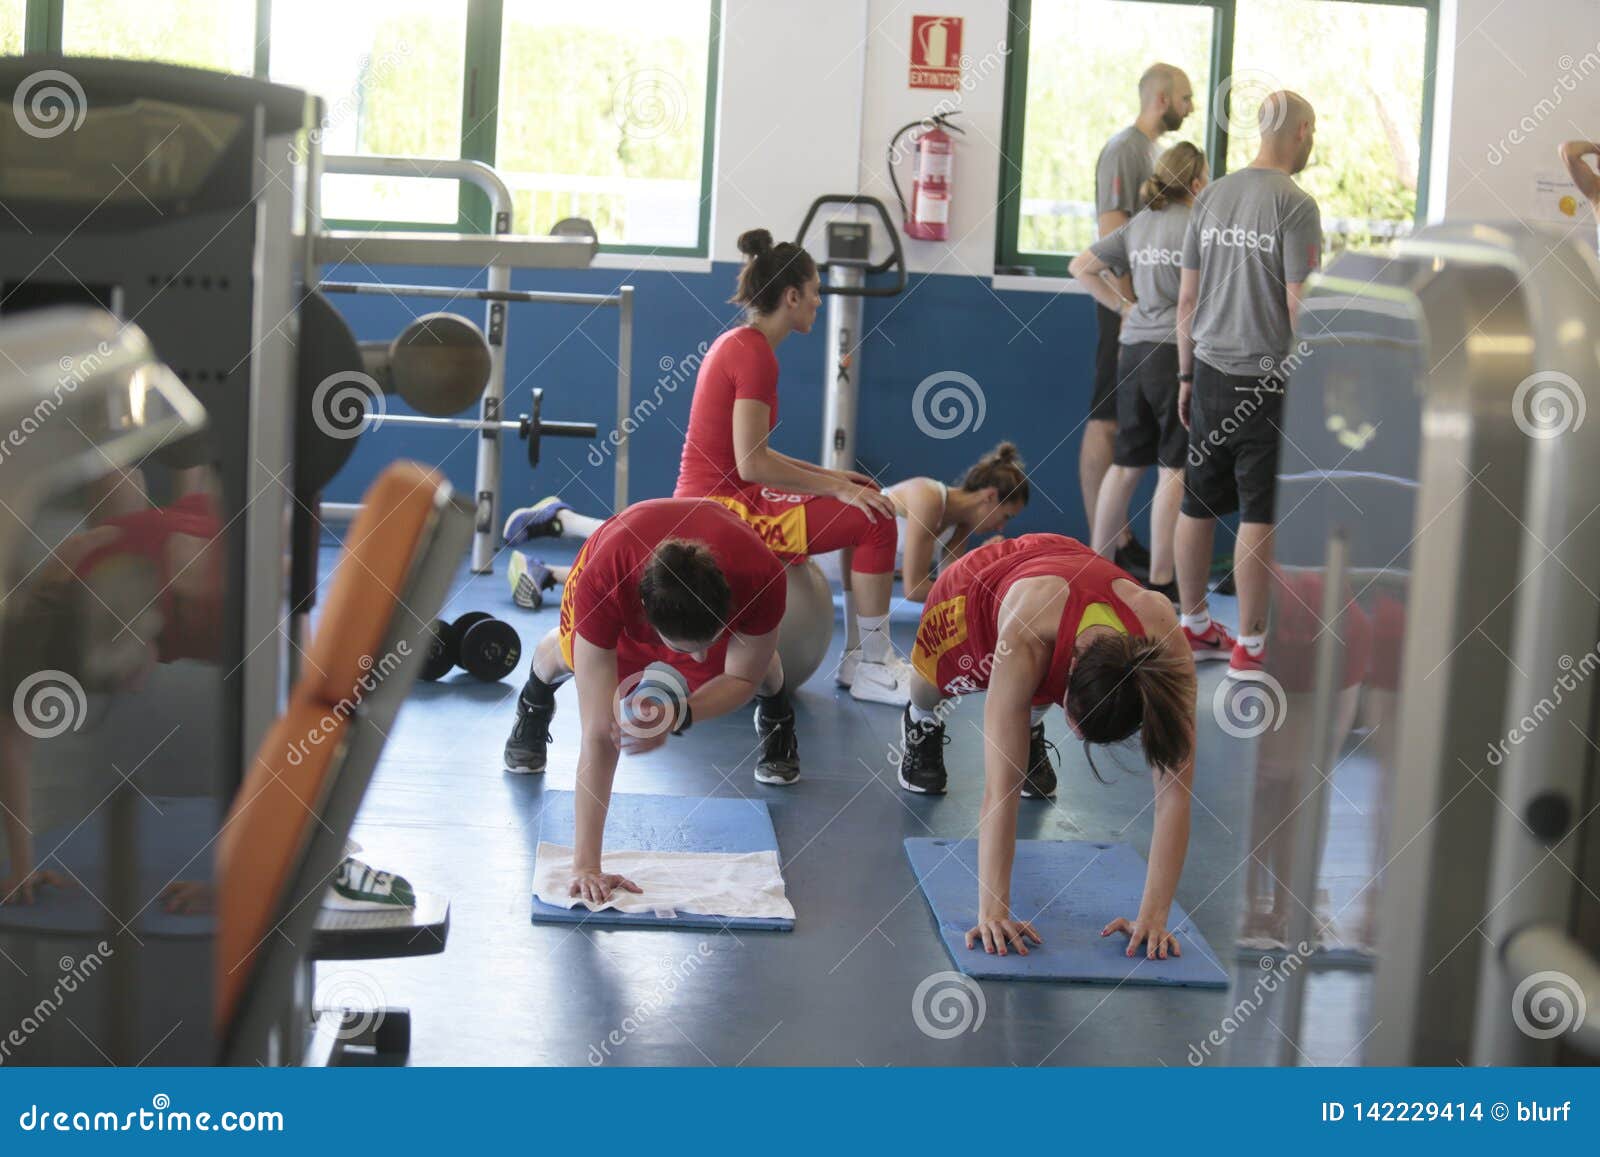 Spain National Basketball Women Team Training At Gym